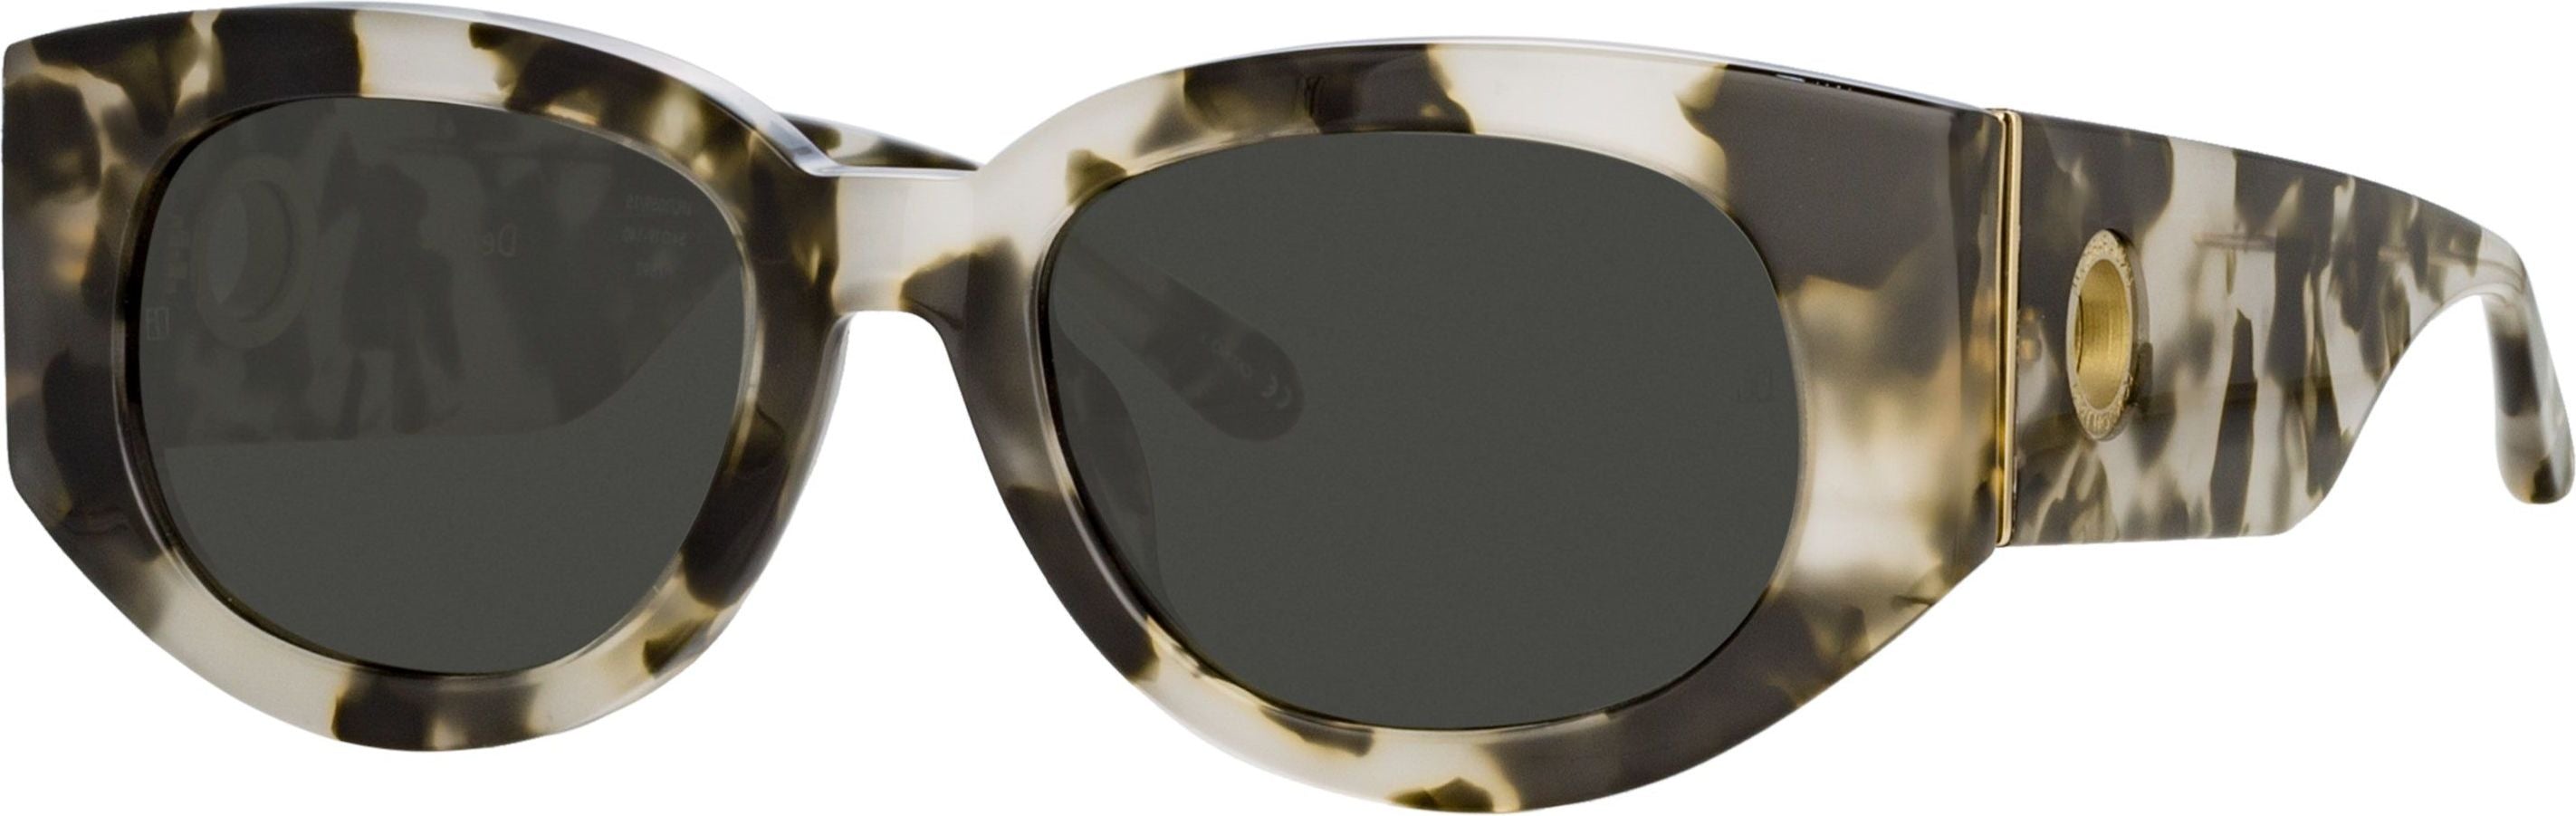 Color_LFL1059C15SUN - Debbie D-Frame Sunglasses in Black and Grey Tortoiseshell